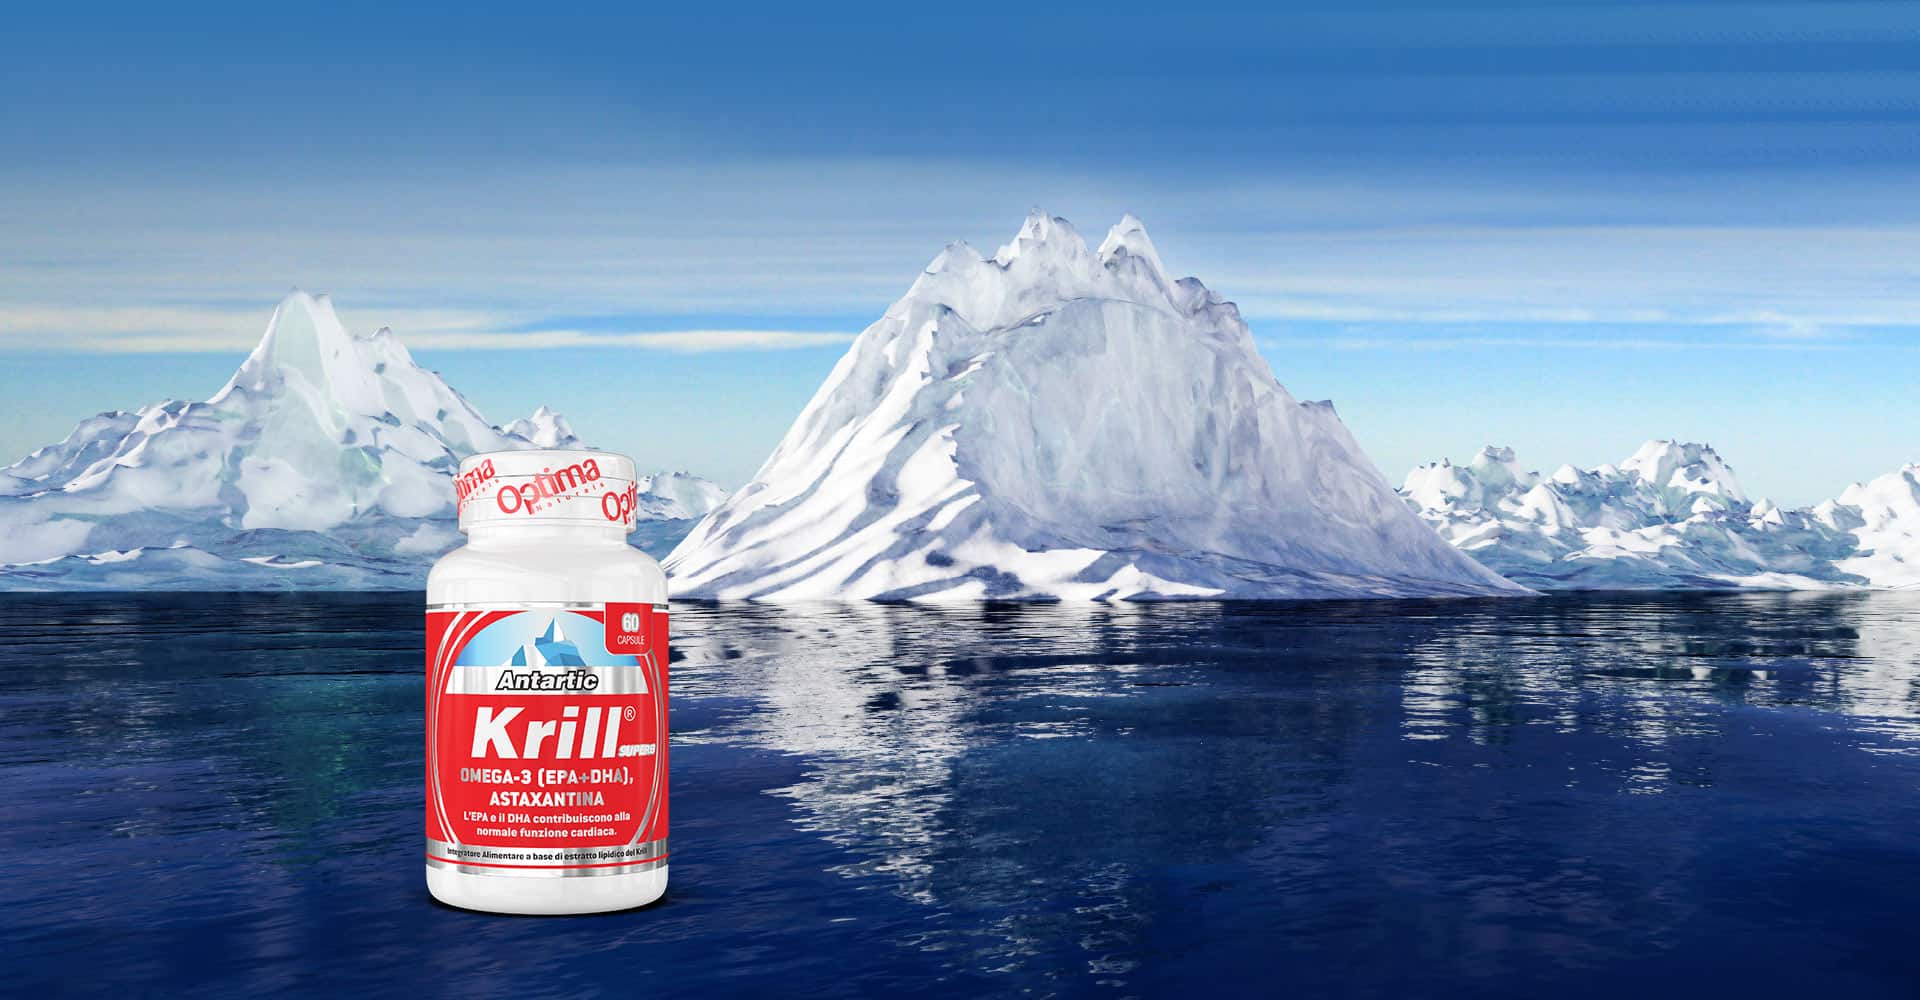 Antartic Krill Superb - Omega 3 dall'artico